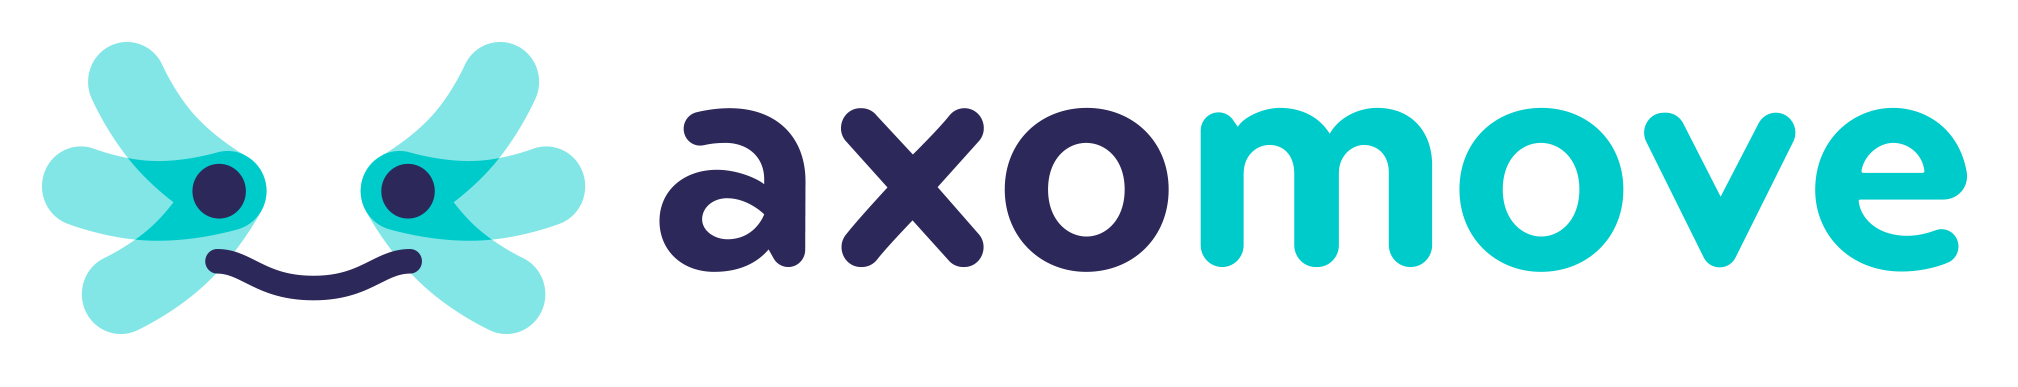 Axomove-logo